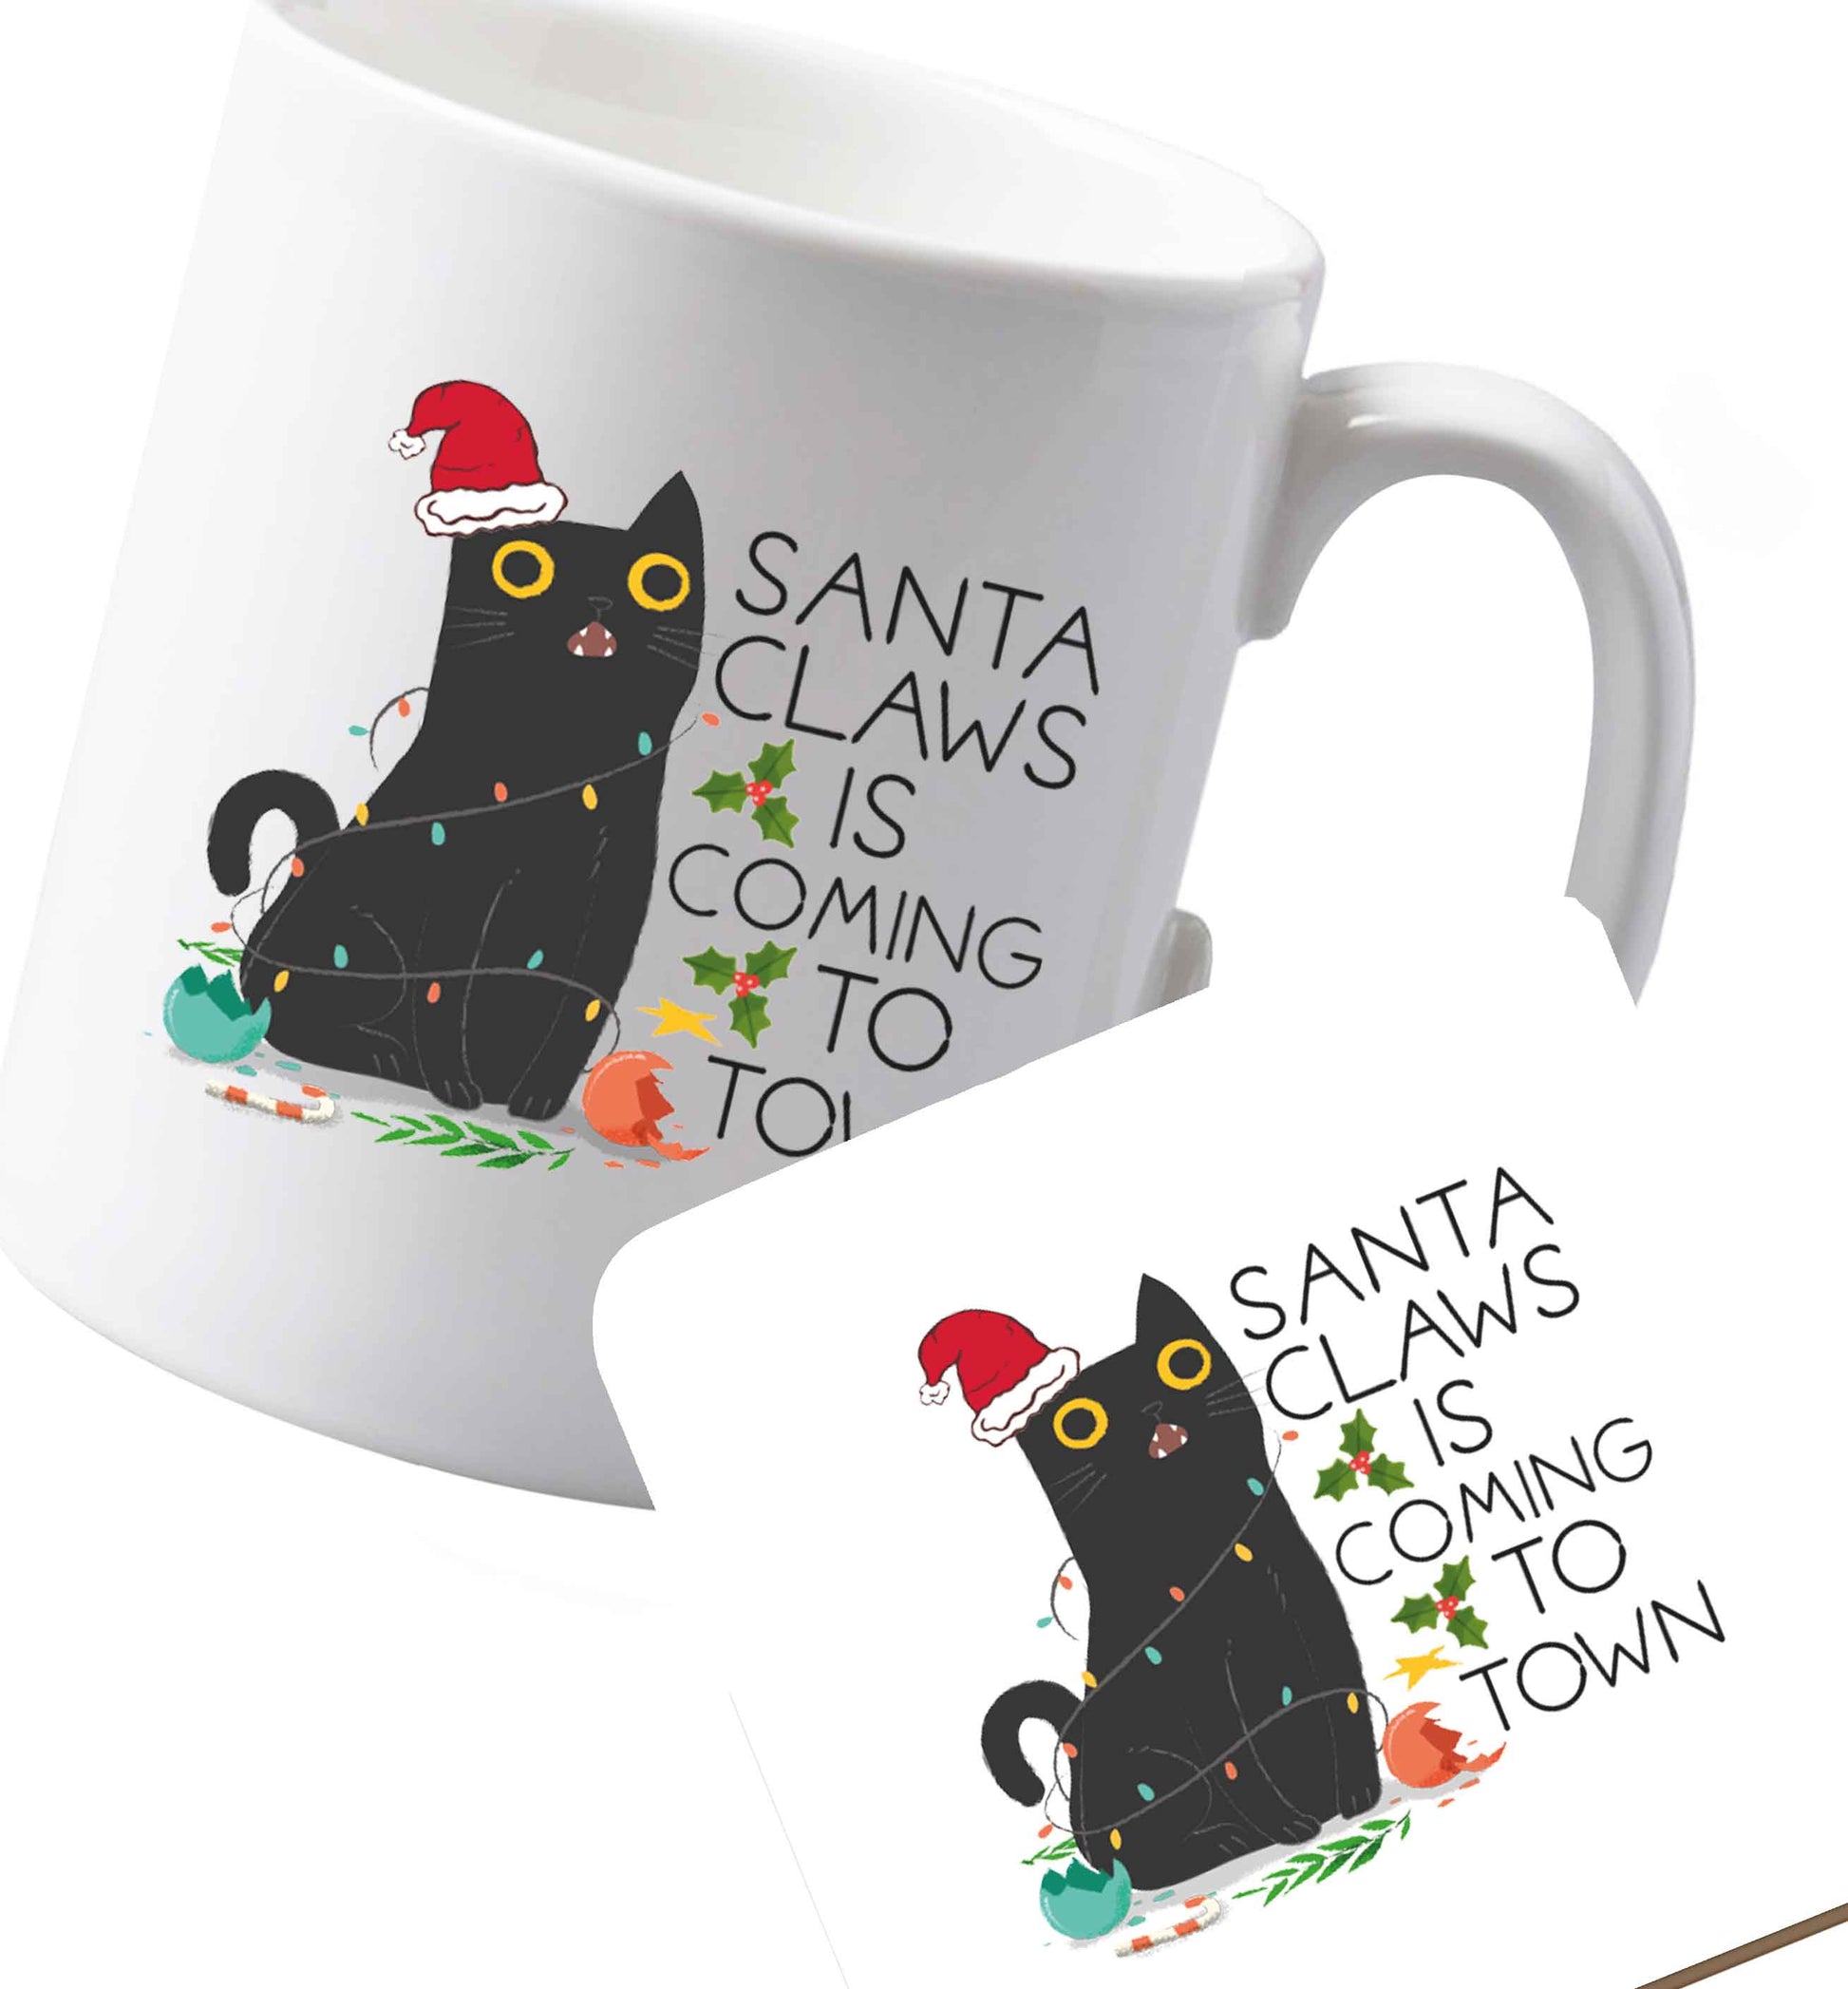 10 oz Ceramic mug and coaster Santa claws is coming to town  both sides